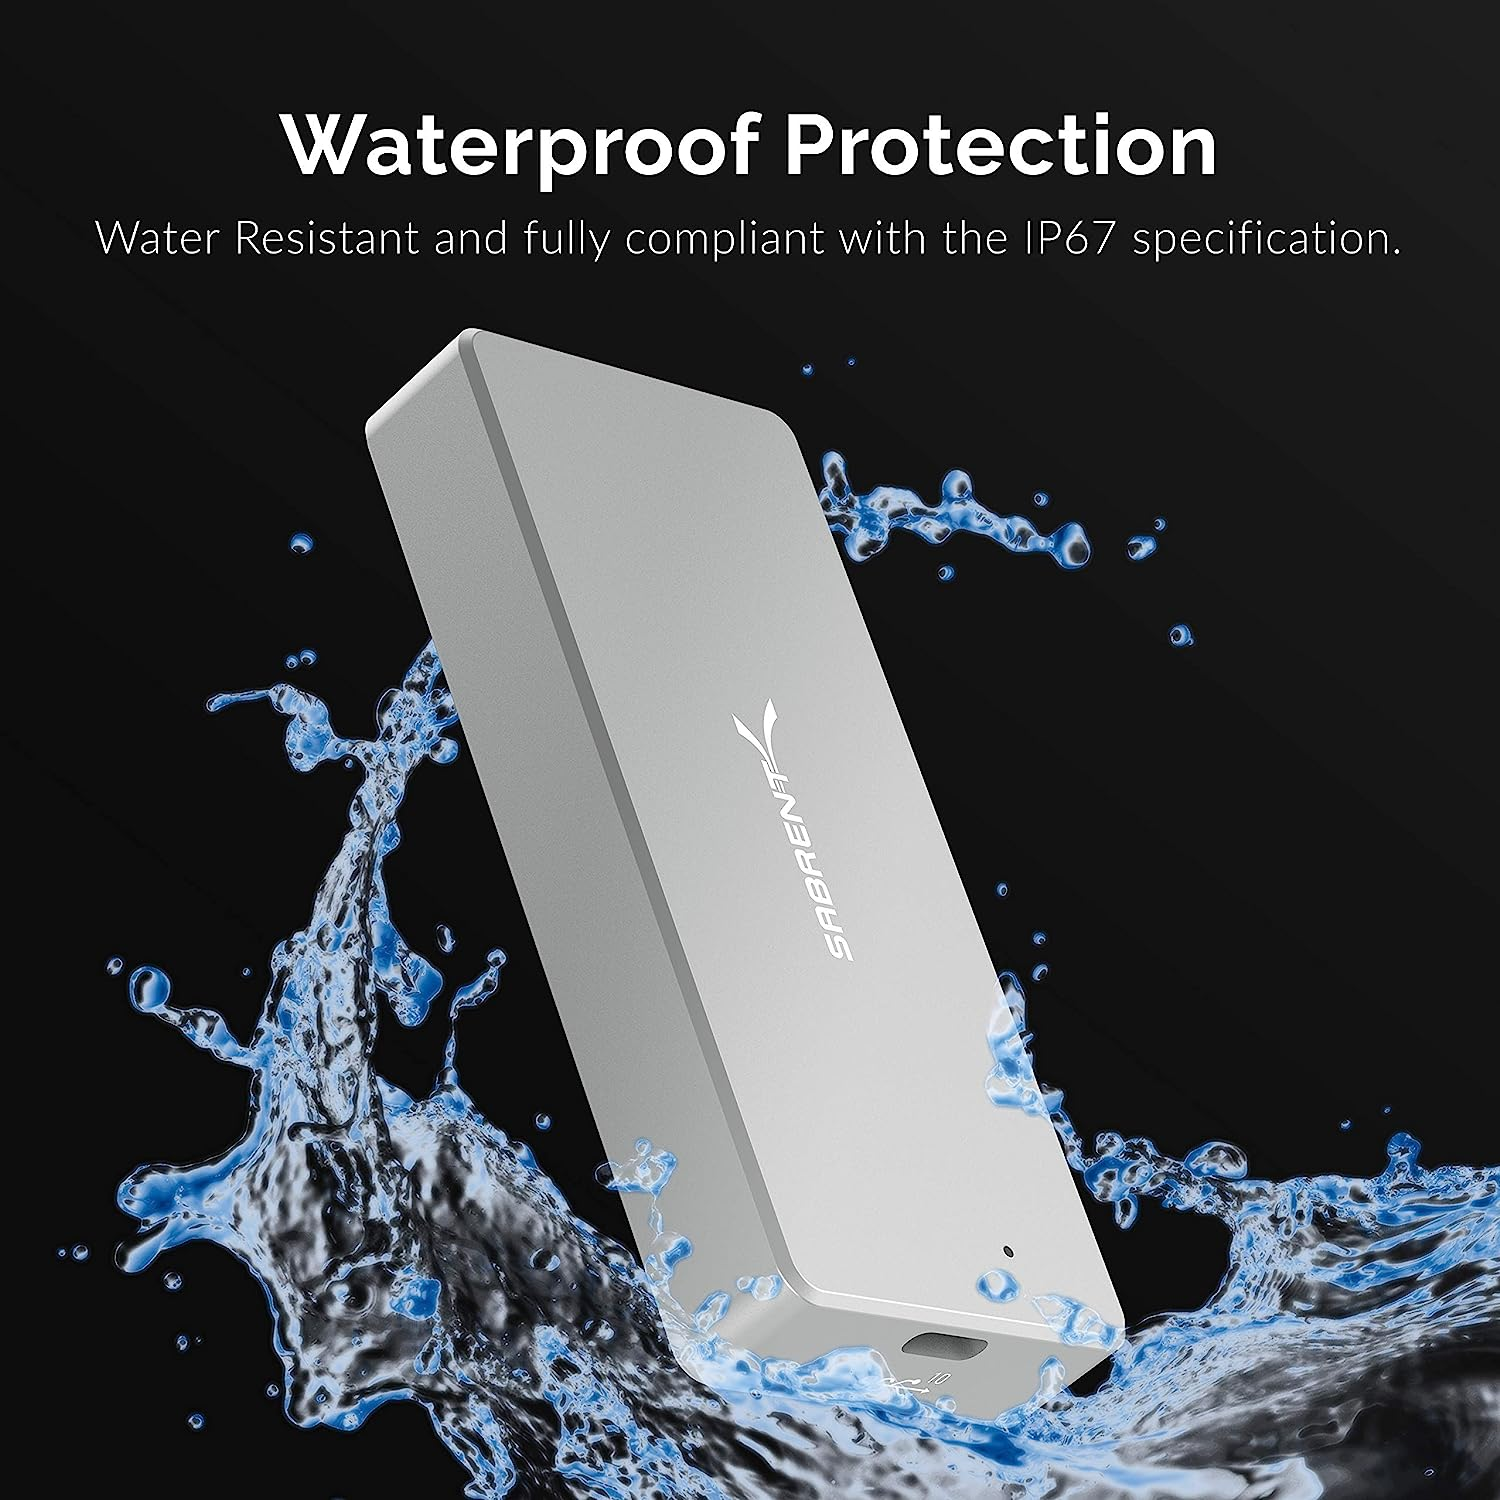 SABRENT USB 3.2 IP67 Water Resistant Tool Free Enclosure for M.2 PCIe NVMe and M.2 SATA SSDs (EC-WPTF)